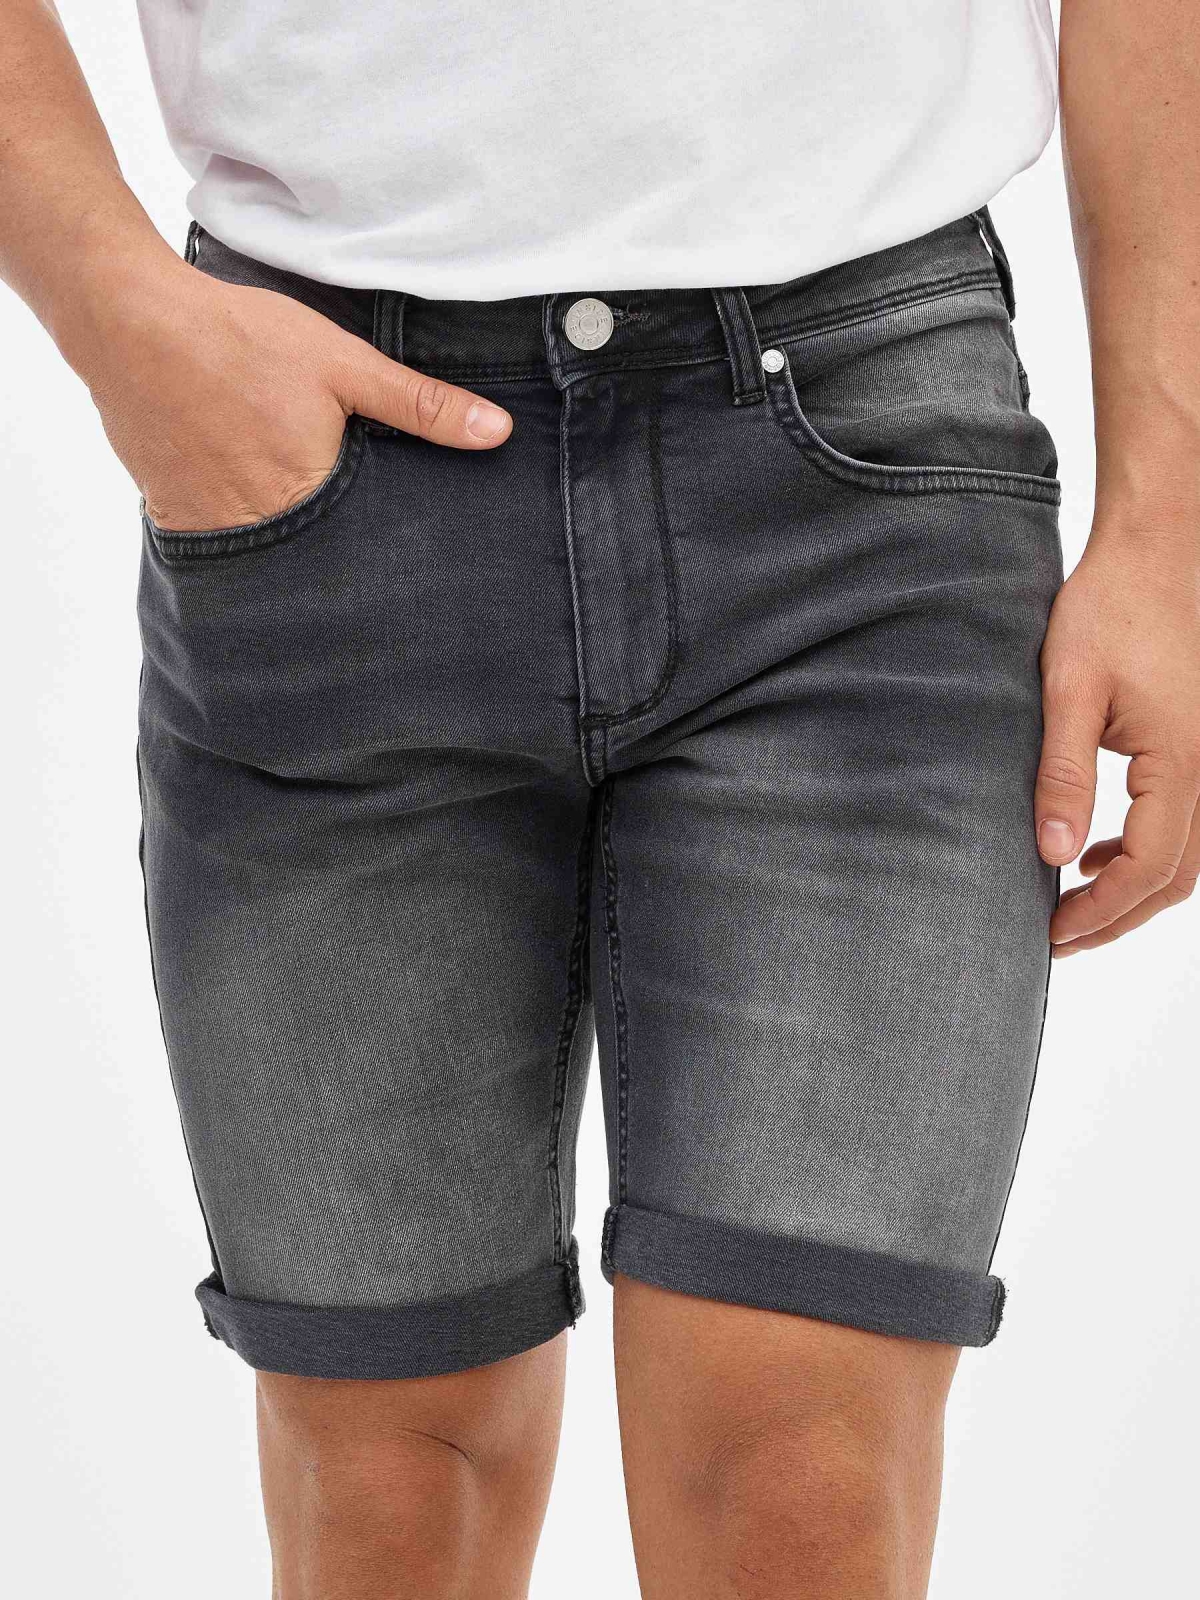 Washed effect denim shorts black detail view